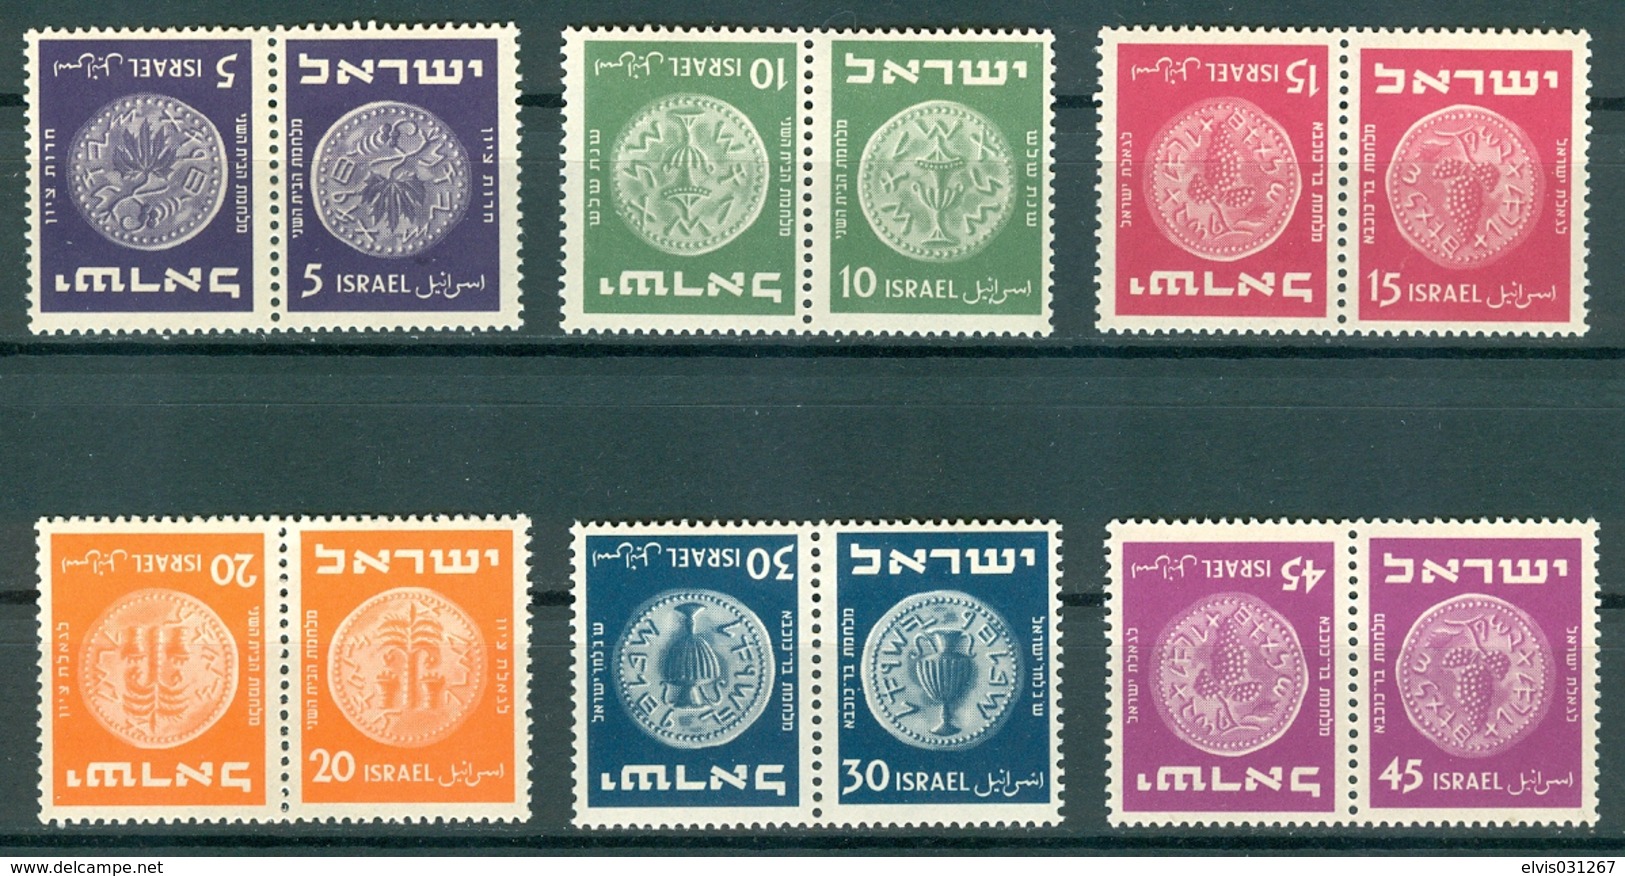 Israel - 1950, Michel/Philex No. : 42-50, 3rd Coinage, - MNH - TETE BECHE PAIRS - Full Tab - Ongebruikt (met Tabs)